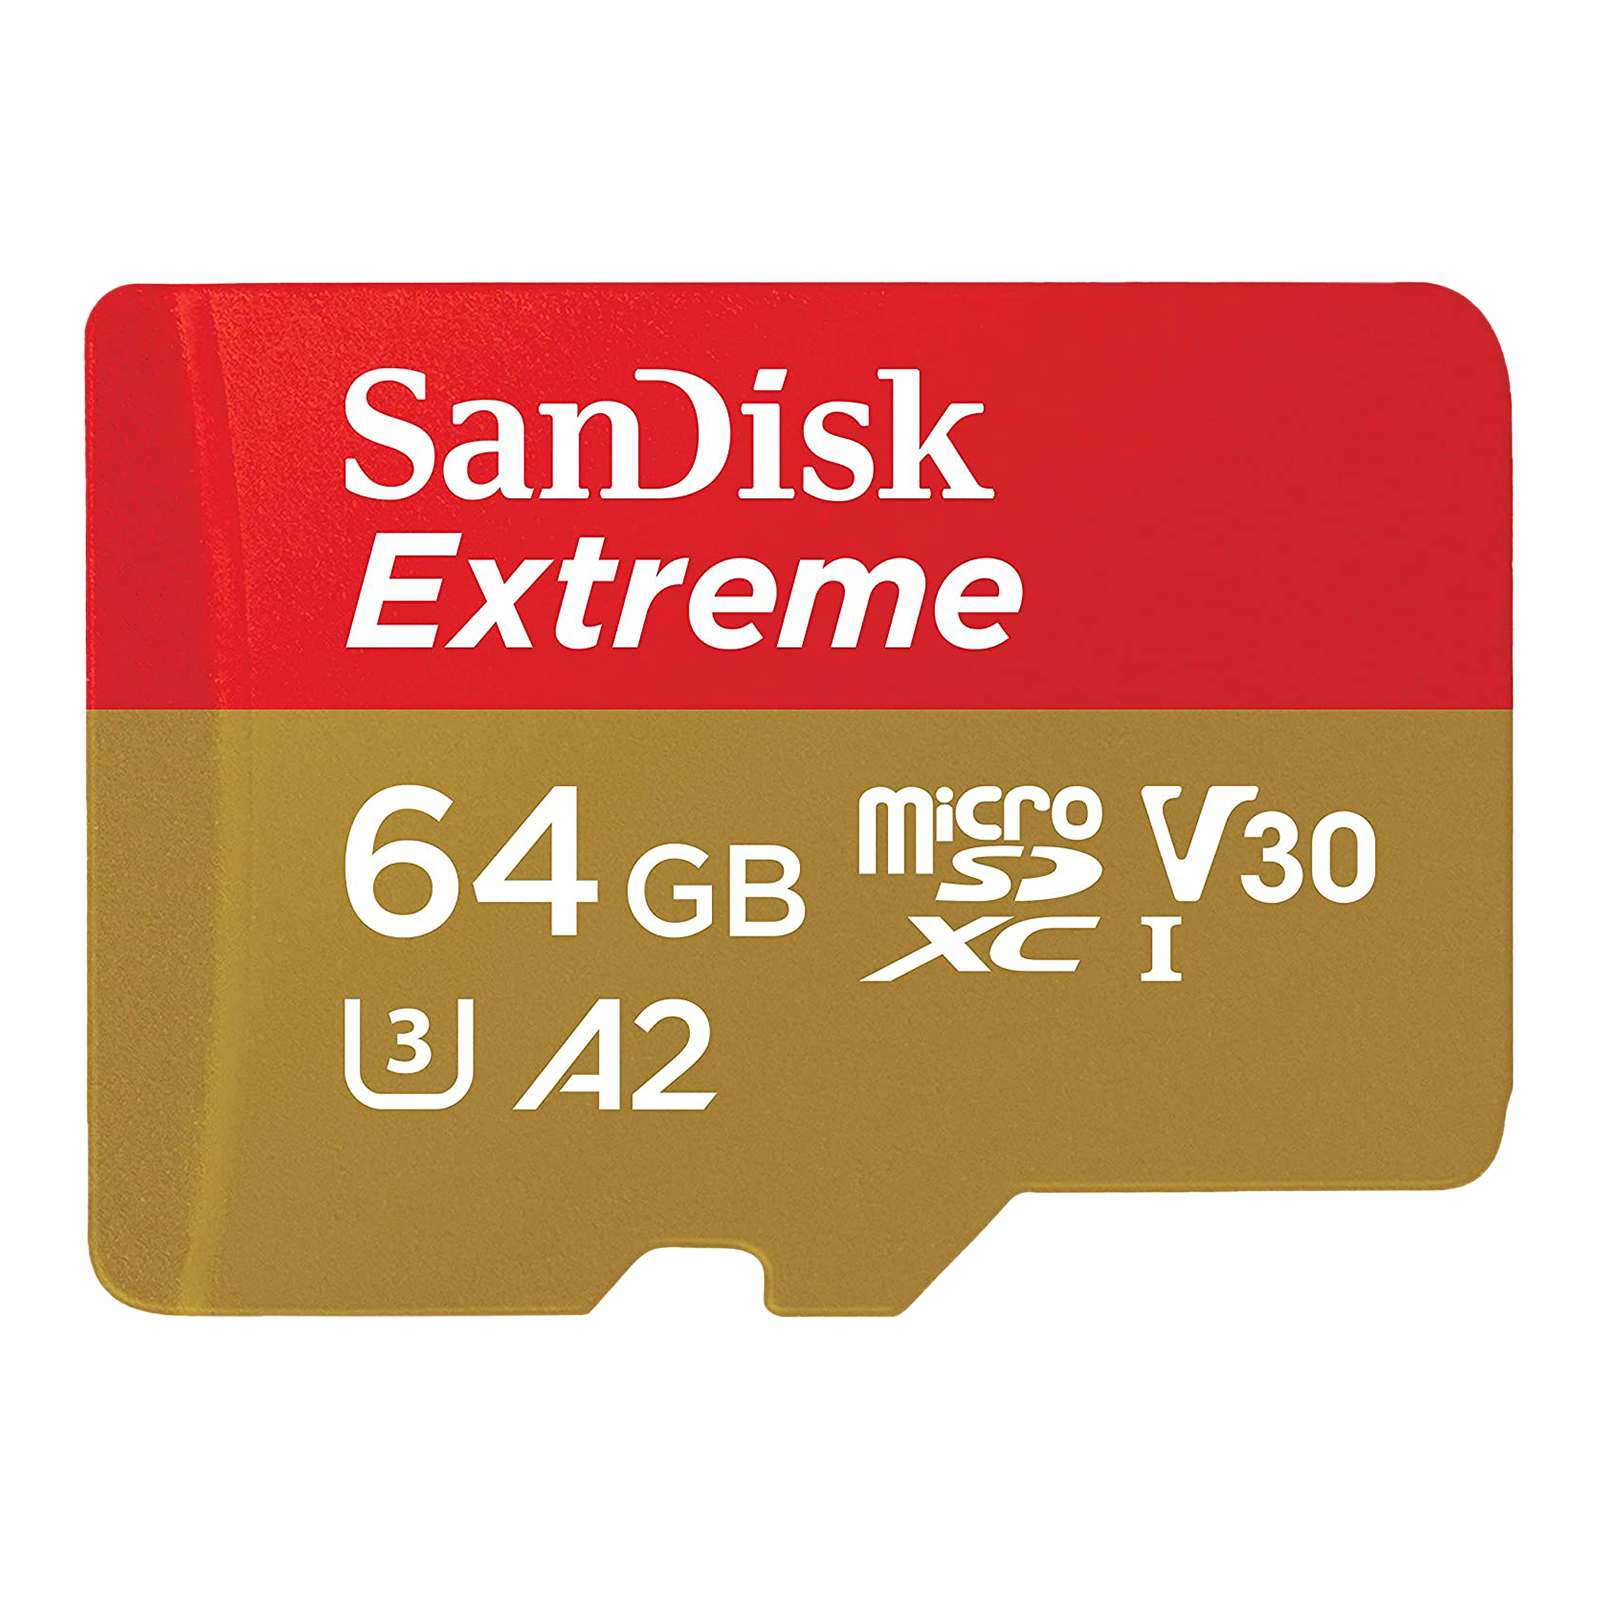 SanDisk Extreme MicroSDXC 64GB Class 3 120MB/s Memory Card